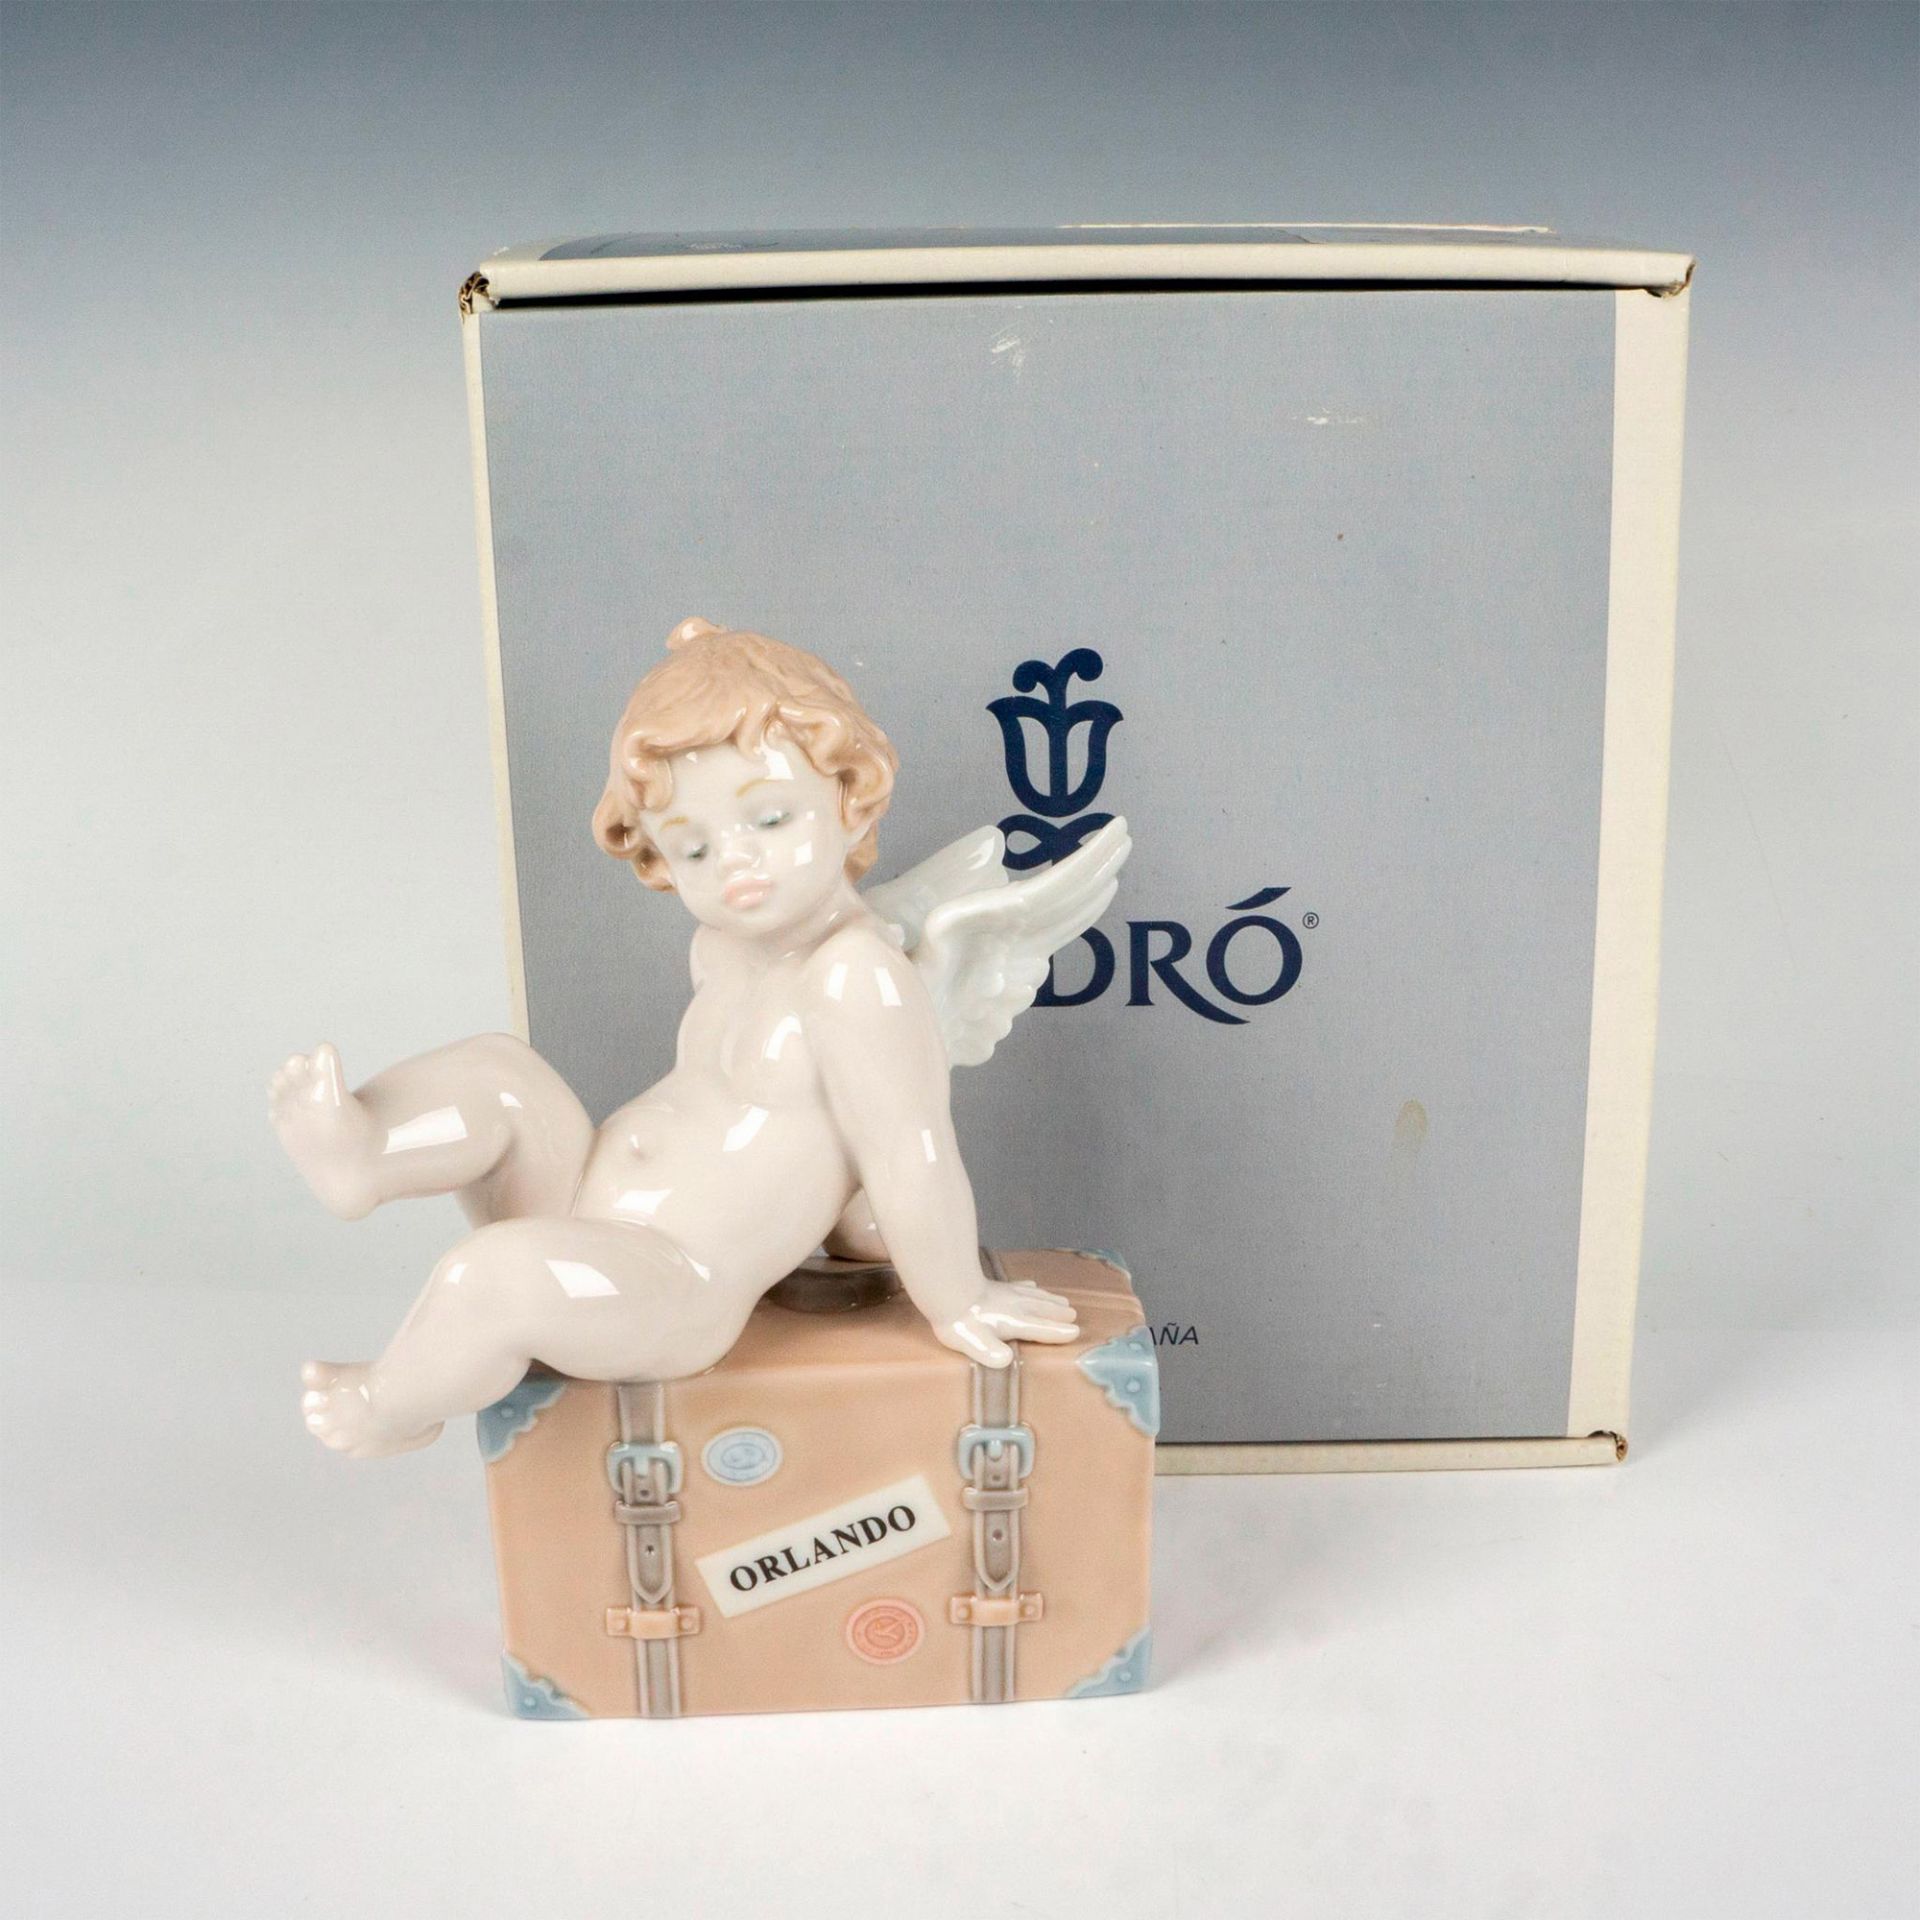 Travel The World Of Lladro (Orlando) 1007314 - Lladro Porcelain Figurine - Image 4 of 4